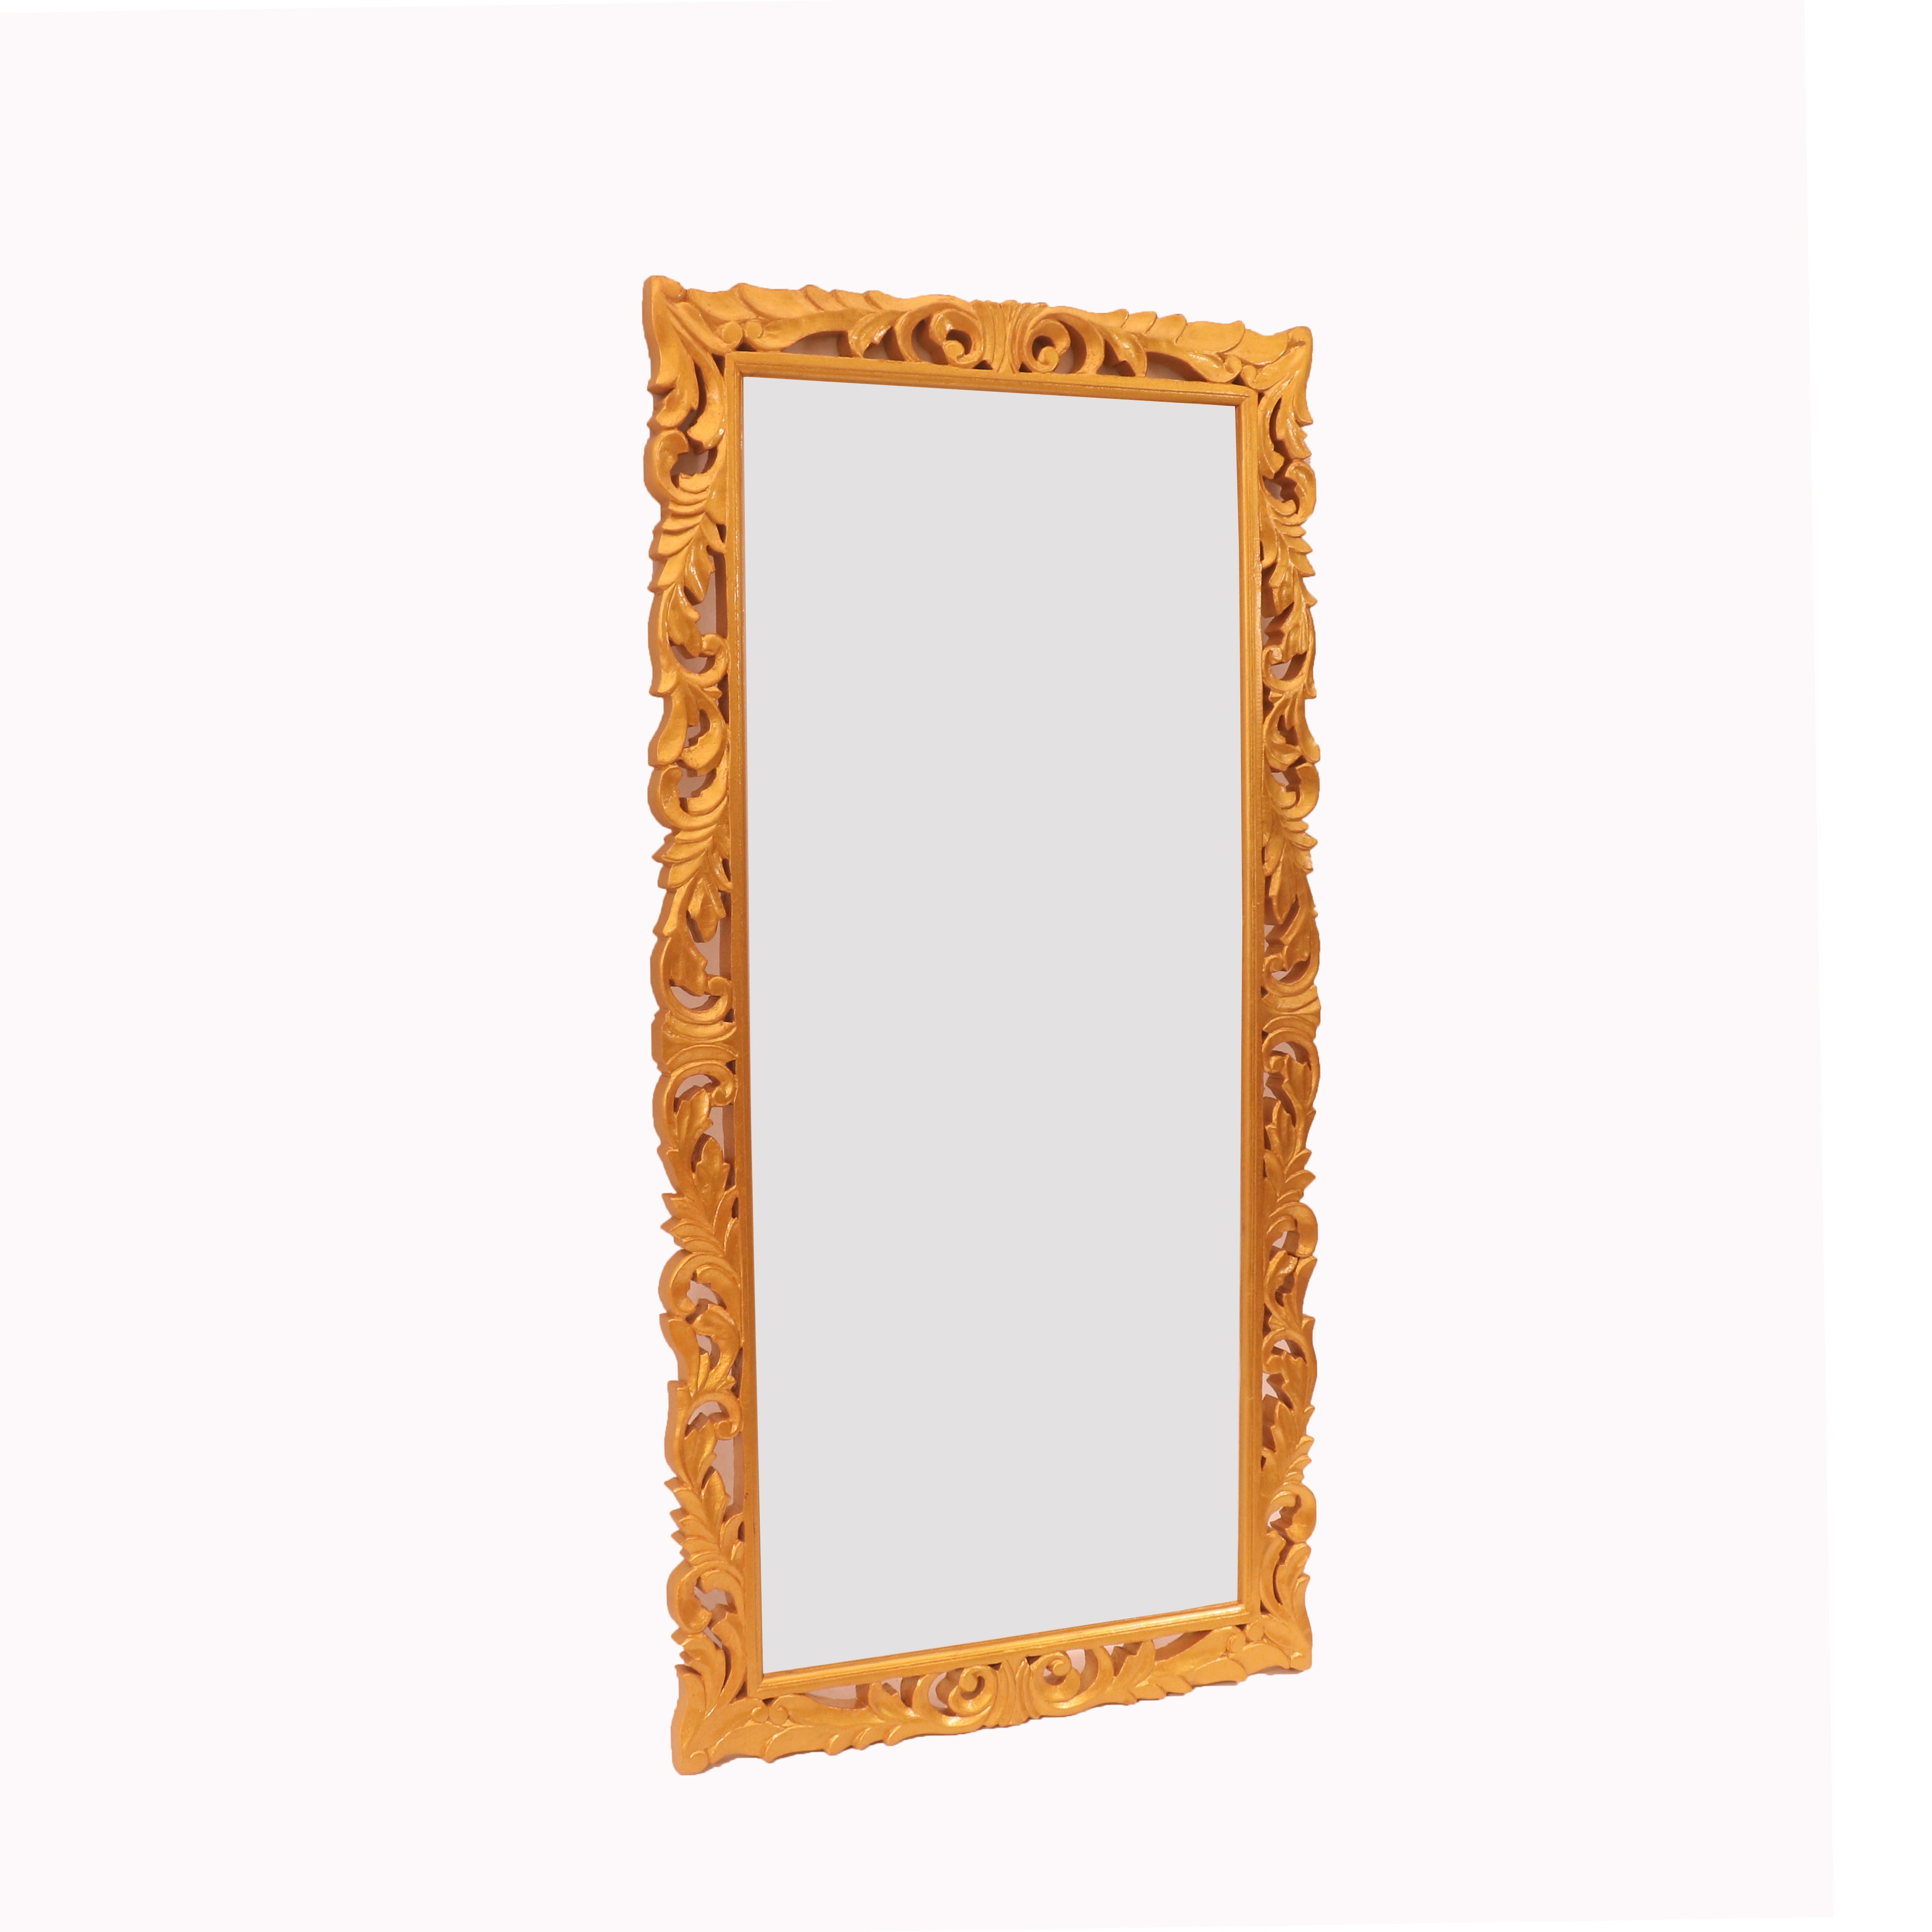 Golden Royal Wooden Frame Mirror